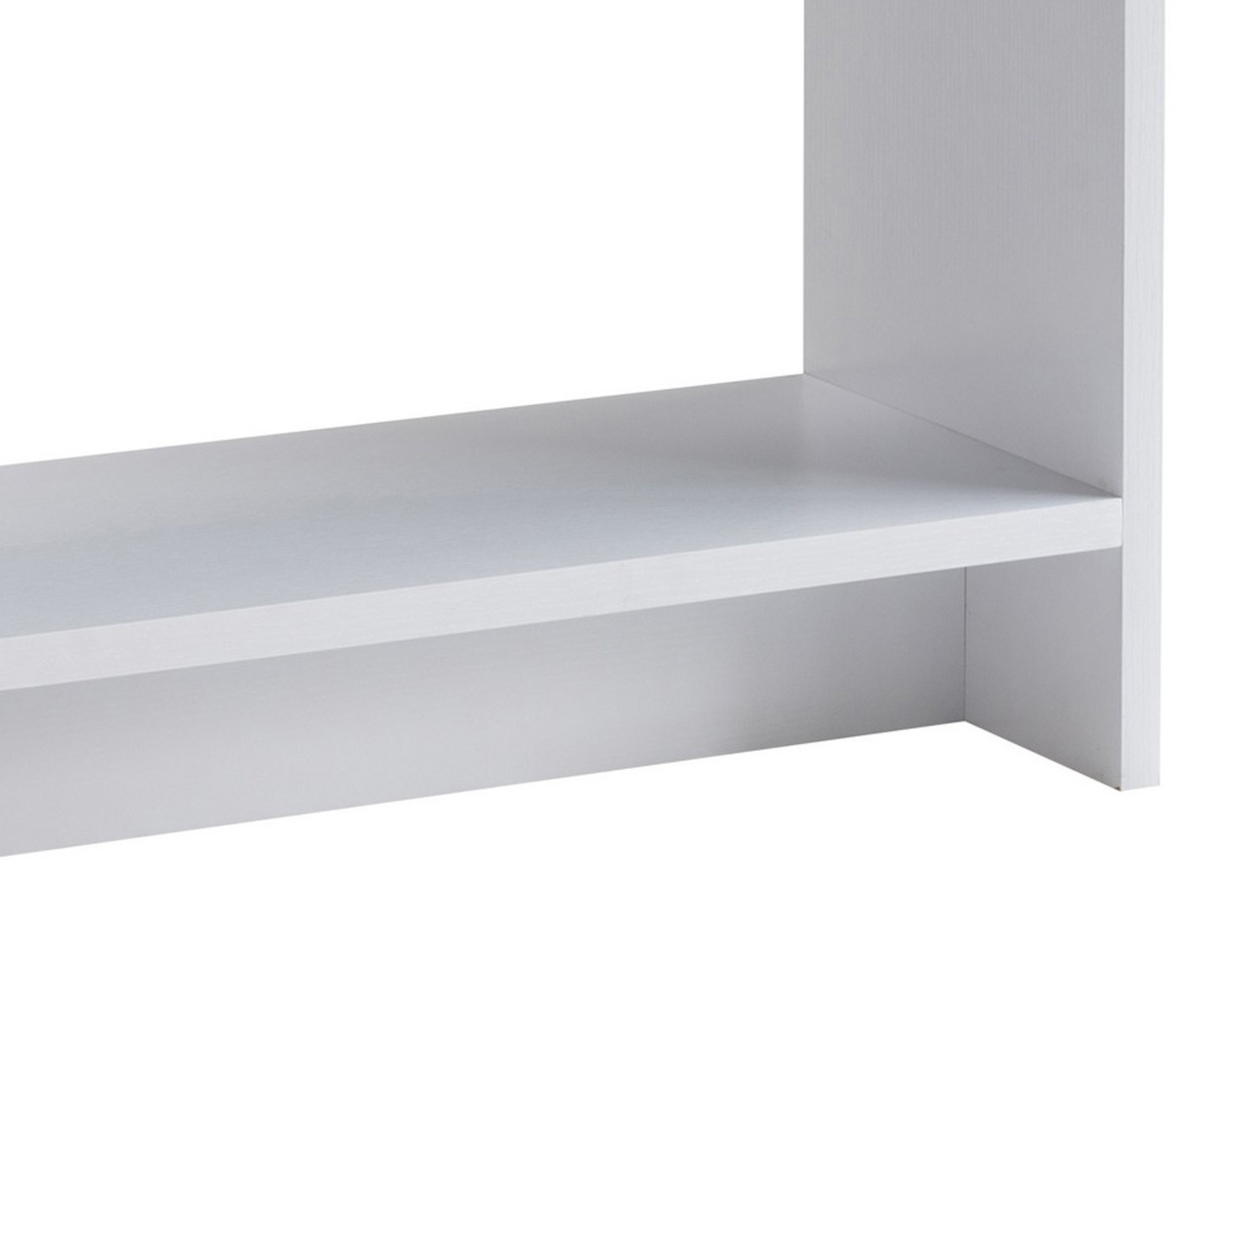 36 Inch Modern Console Table, Multilevel Wood Shelves, Gray And White- Saltoro Sherpi